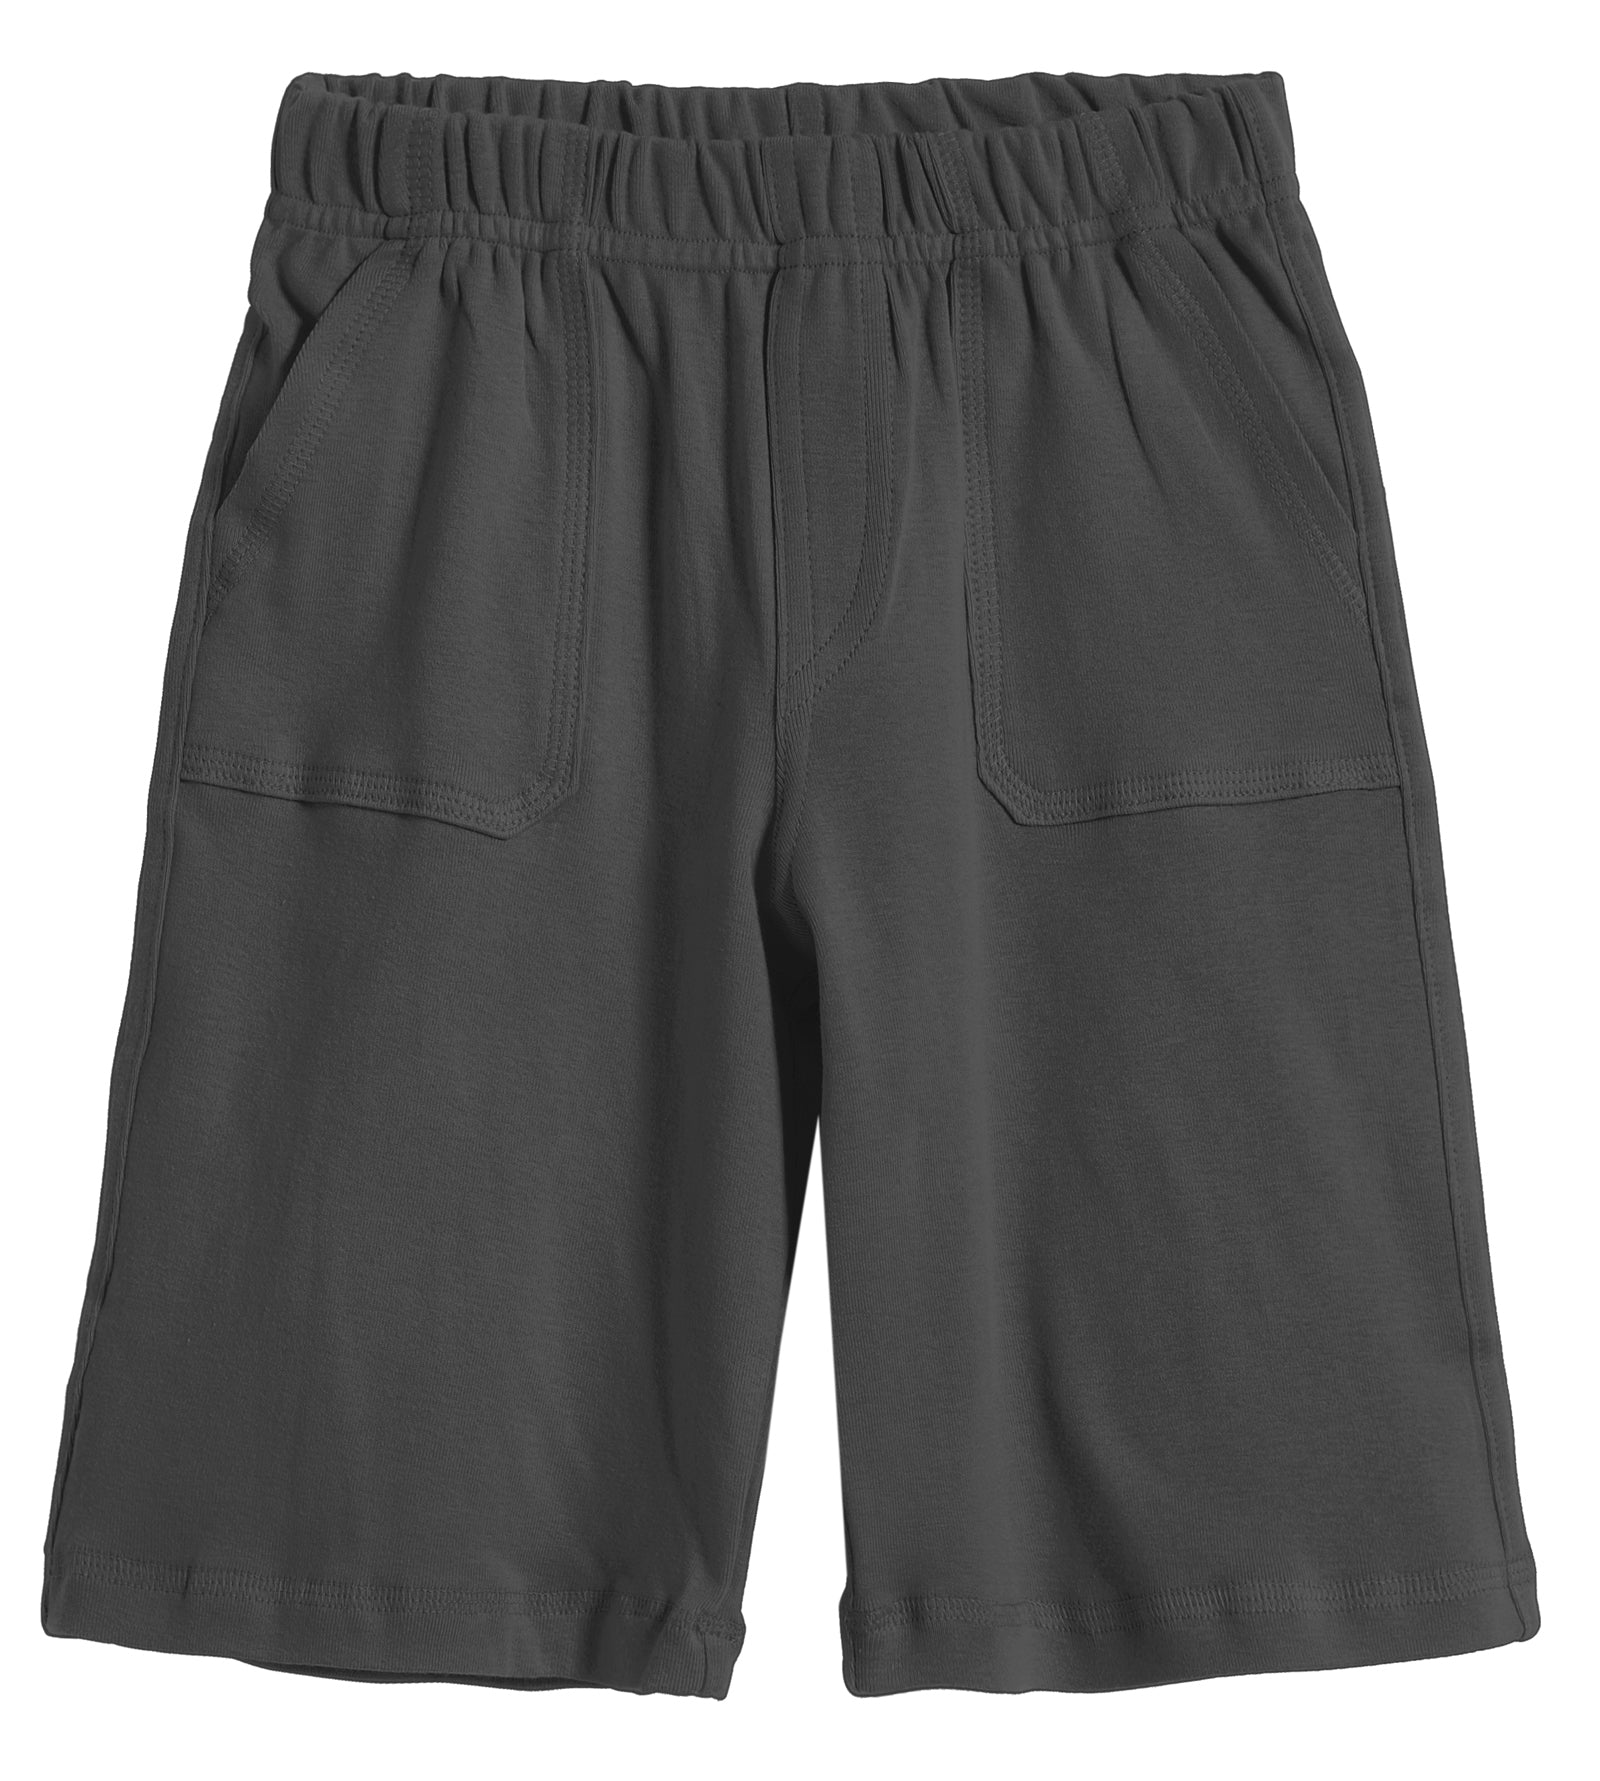 Gunty Cotton Jersey Shorts